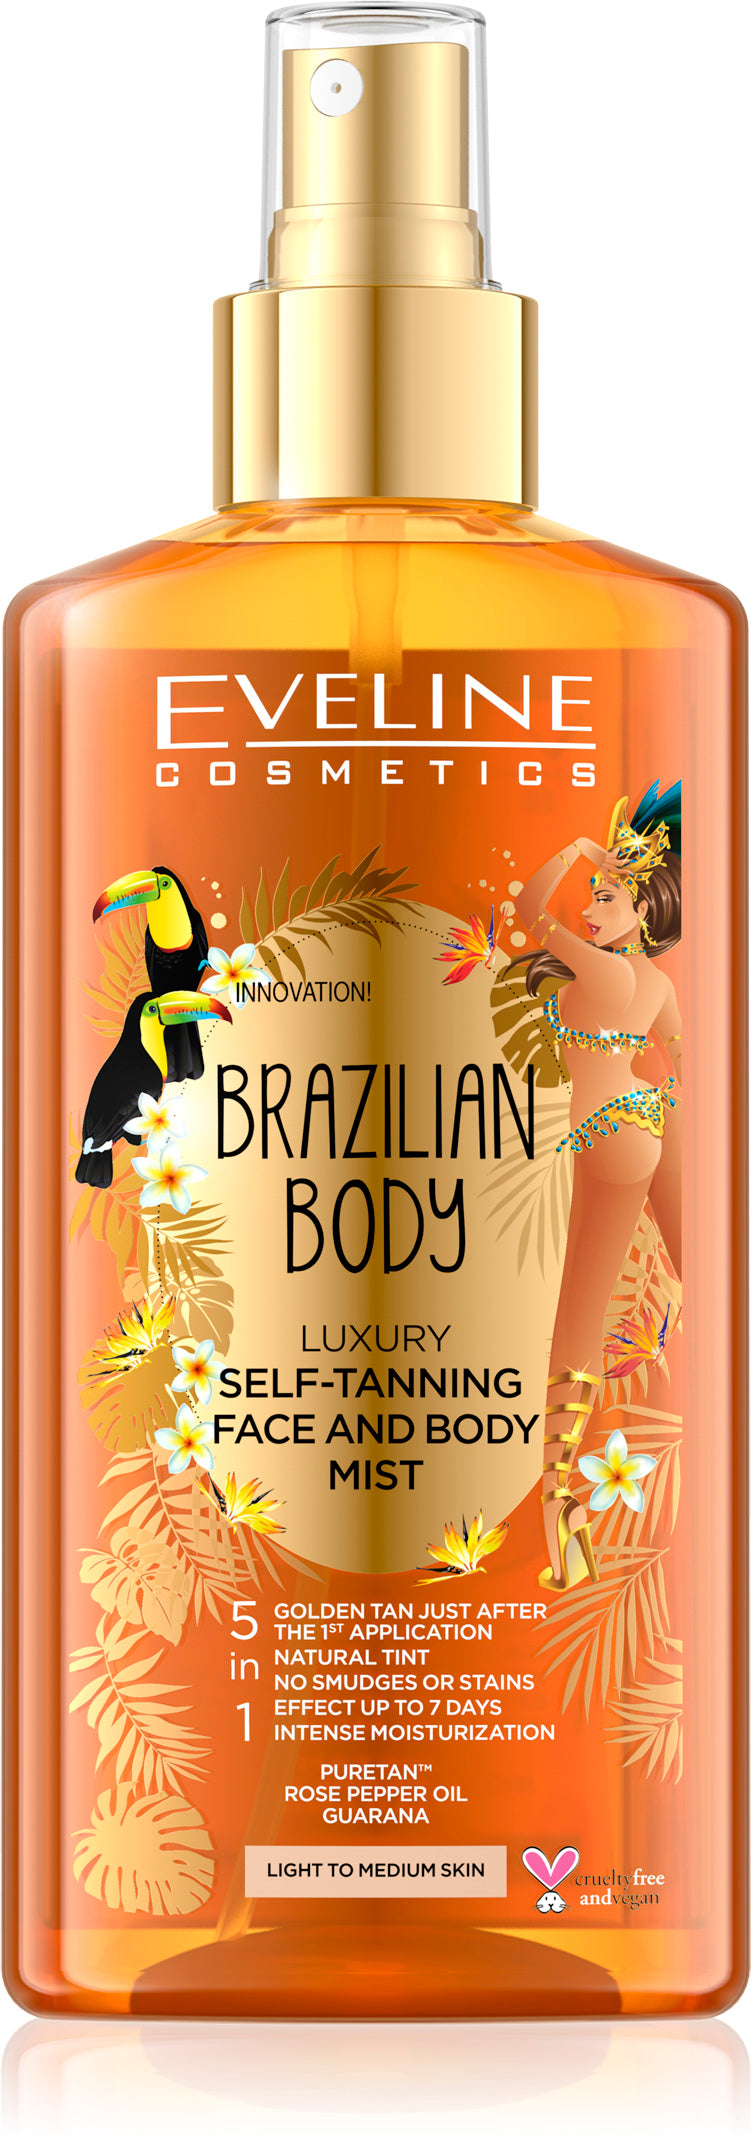 Eveline Brazilian body self-tanning face&body mist 150ml